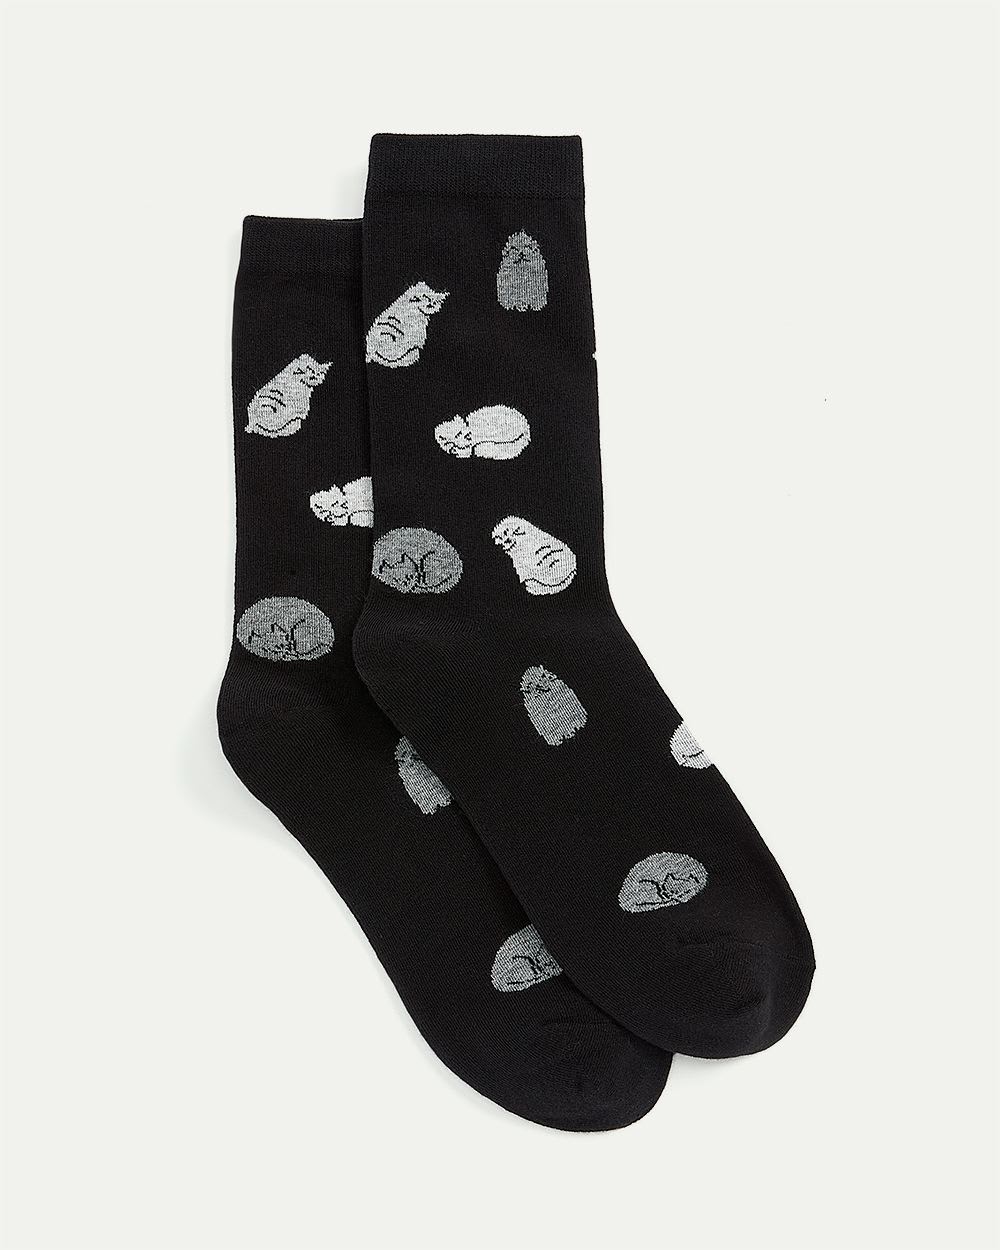 Cotton Socks with Sleeping Cats | Reitmans